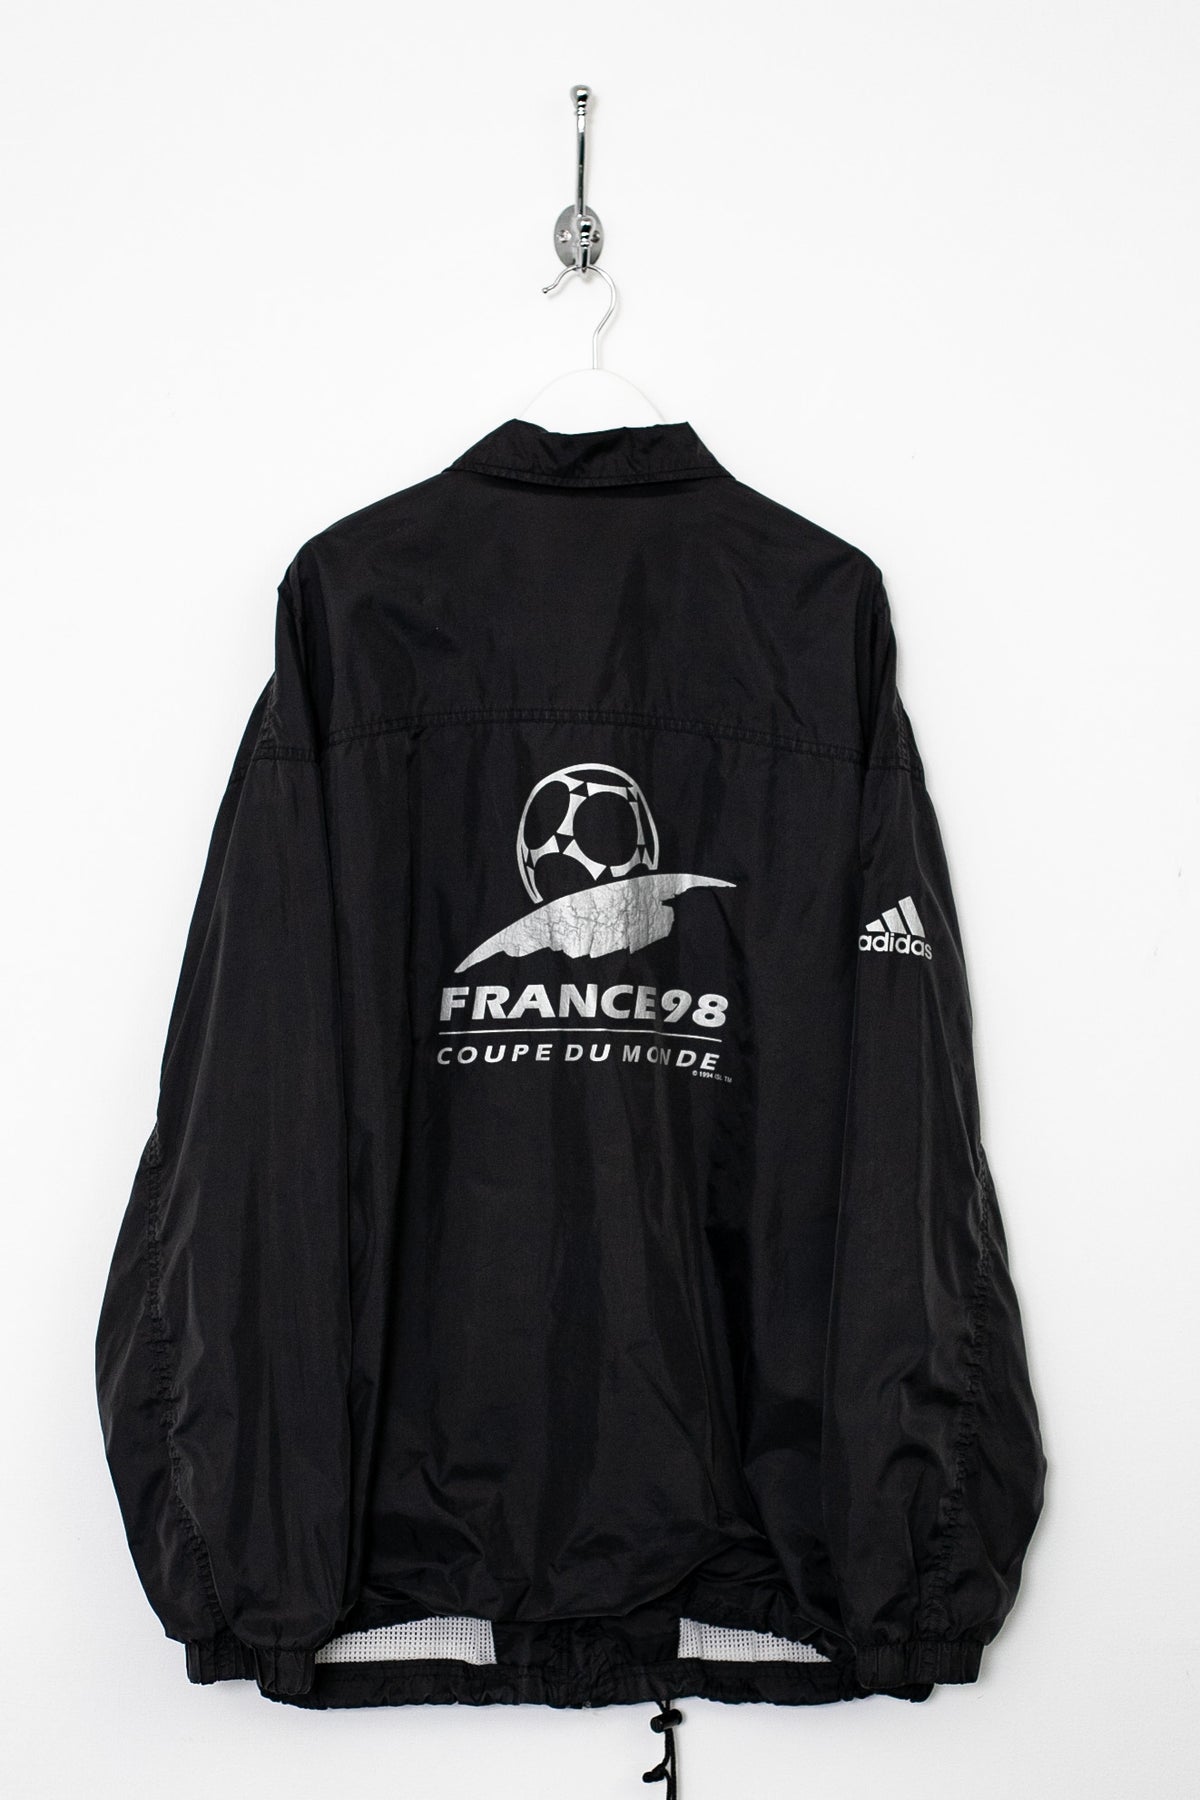 1998 Adidas France World Cup Jacket (XXL)